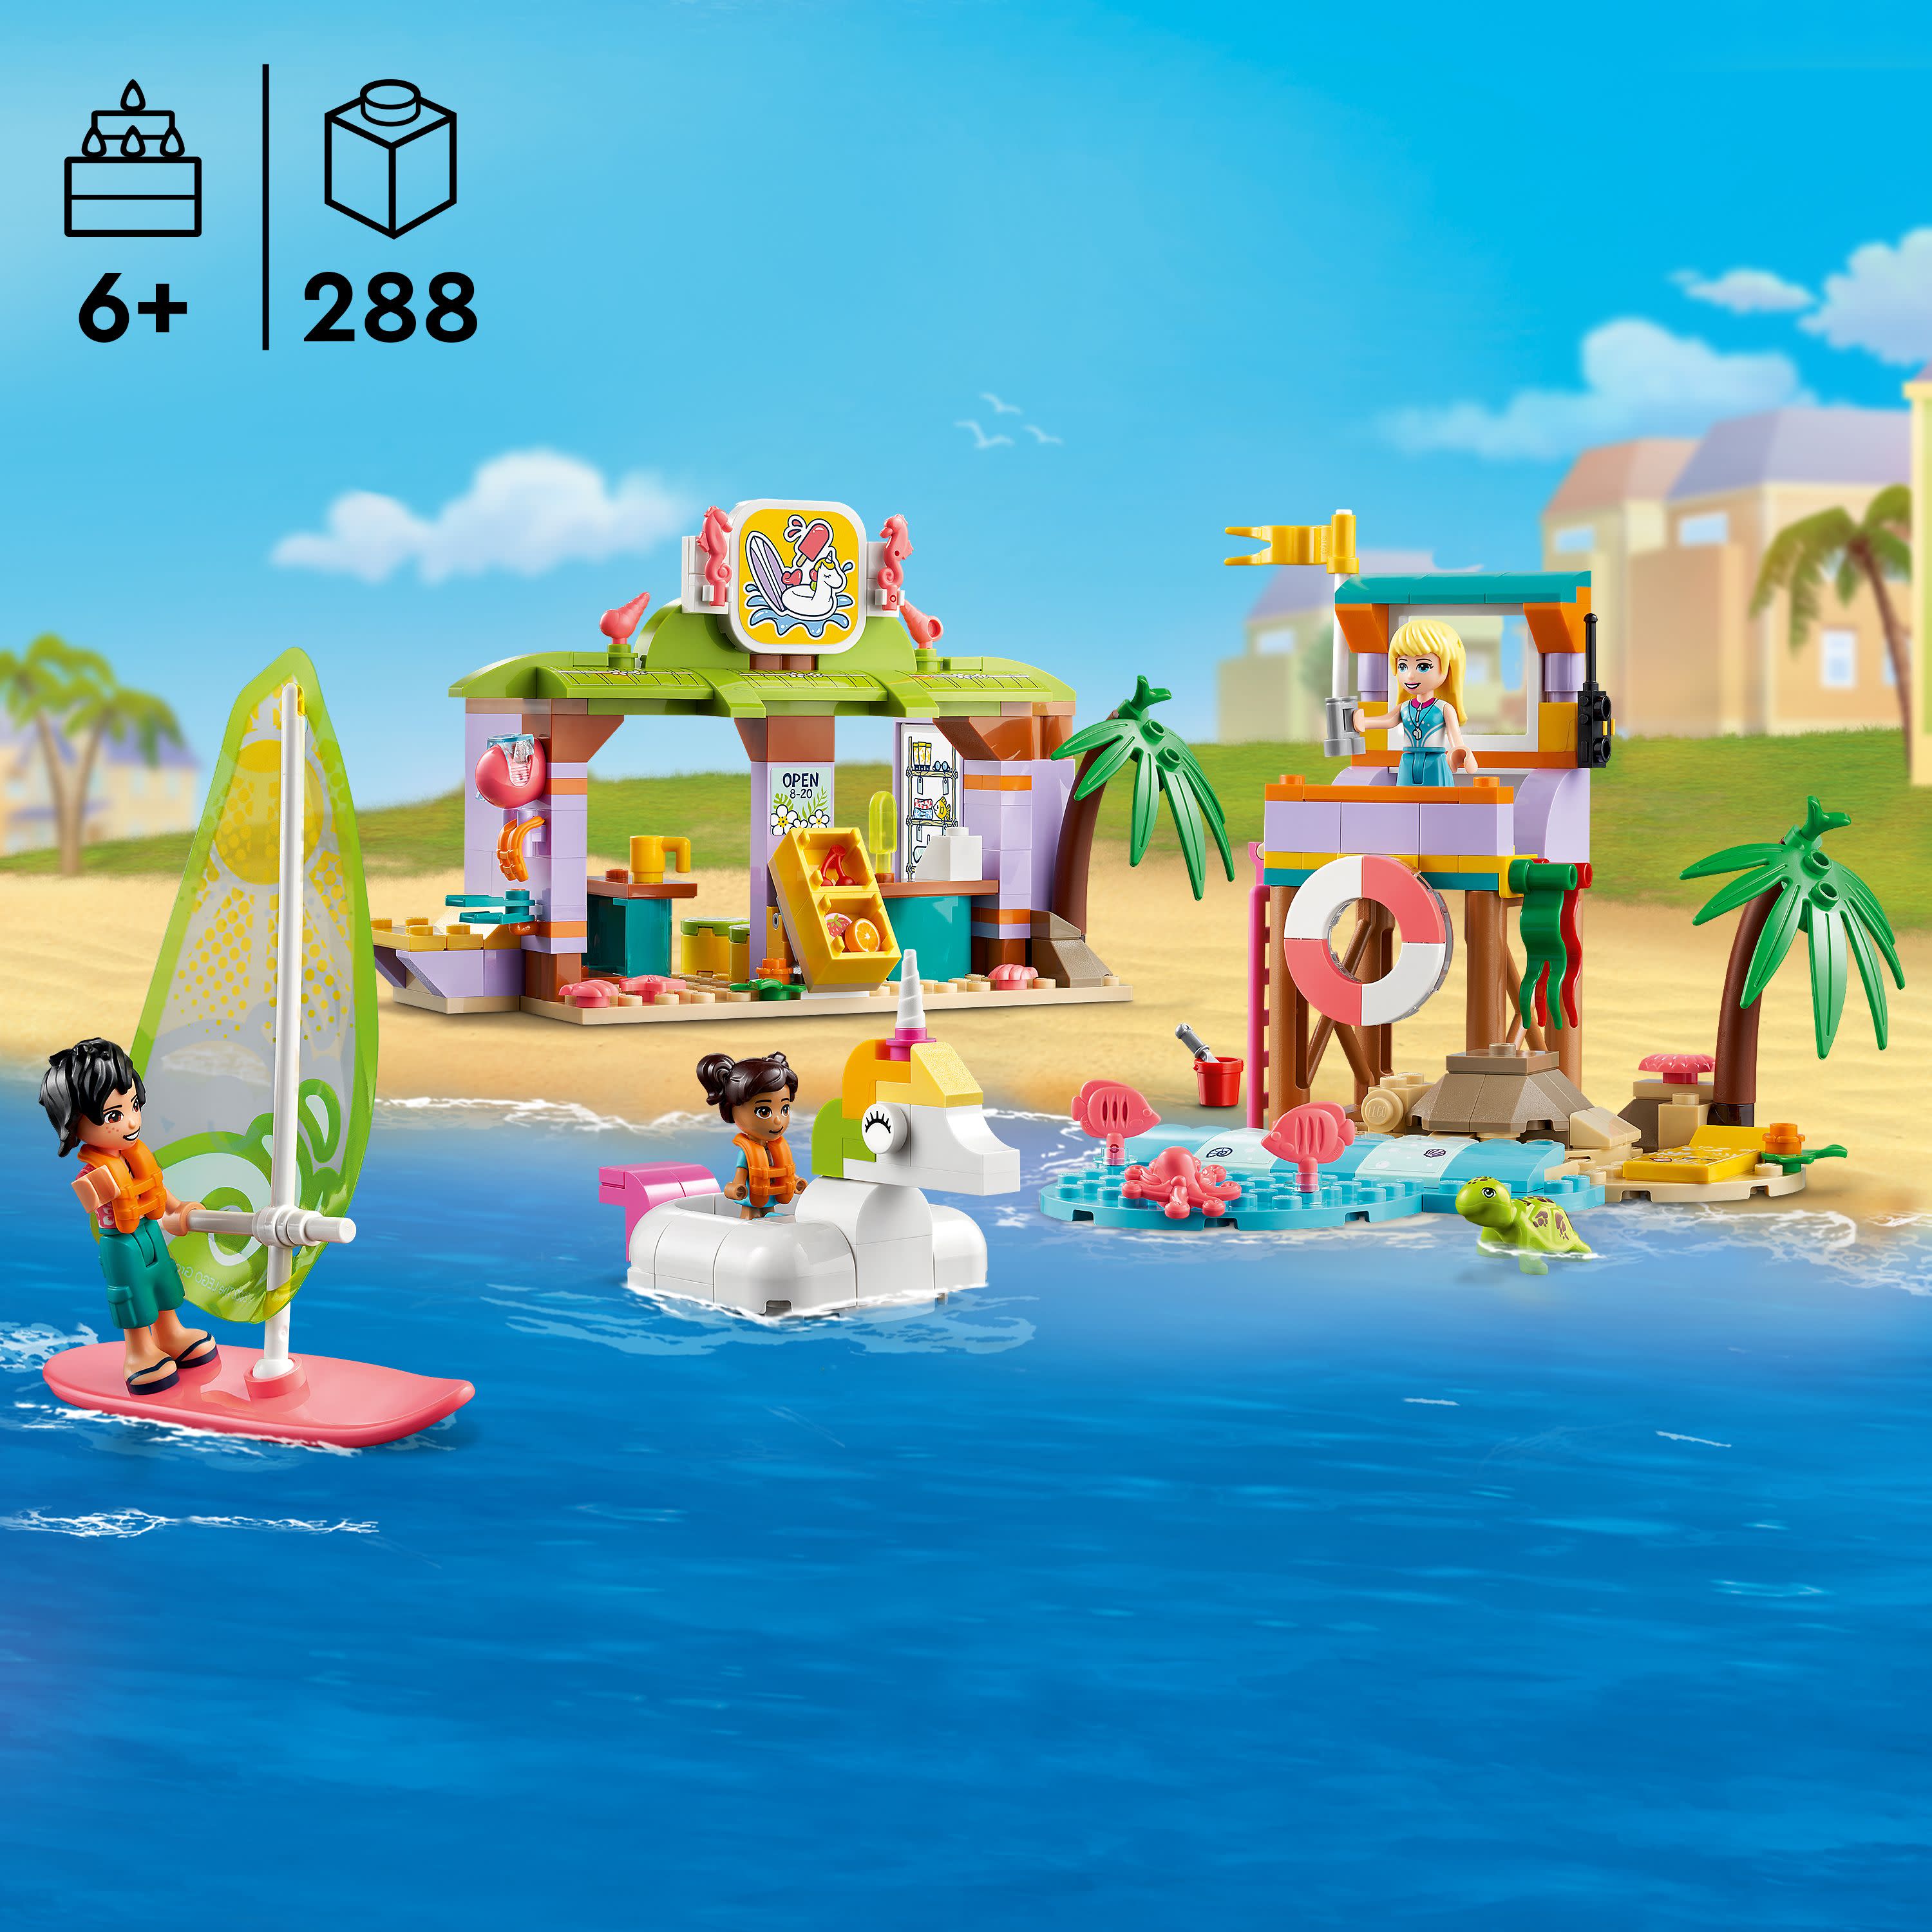 LEGO Friends Surfer Beach Fun 41710 Building Set (288 Pieces) - image 3 of 7